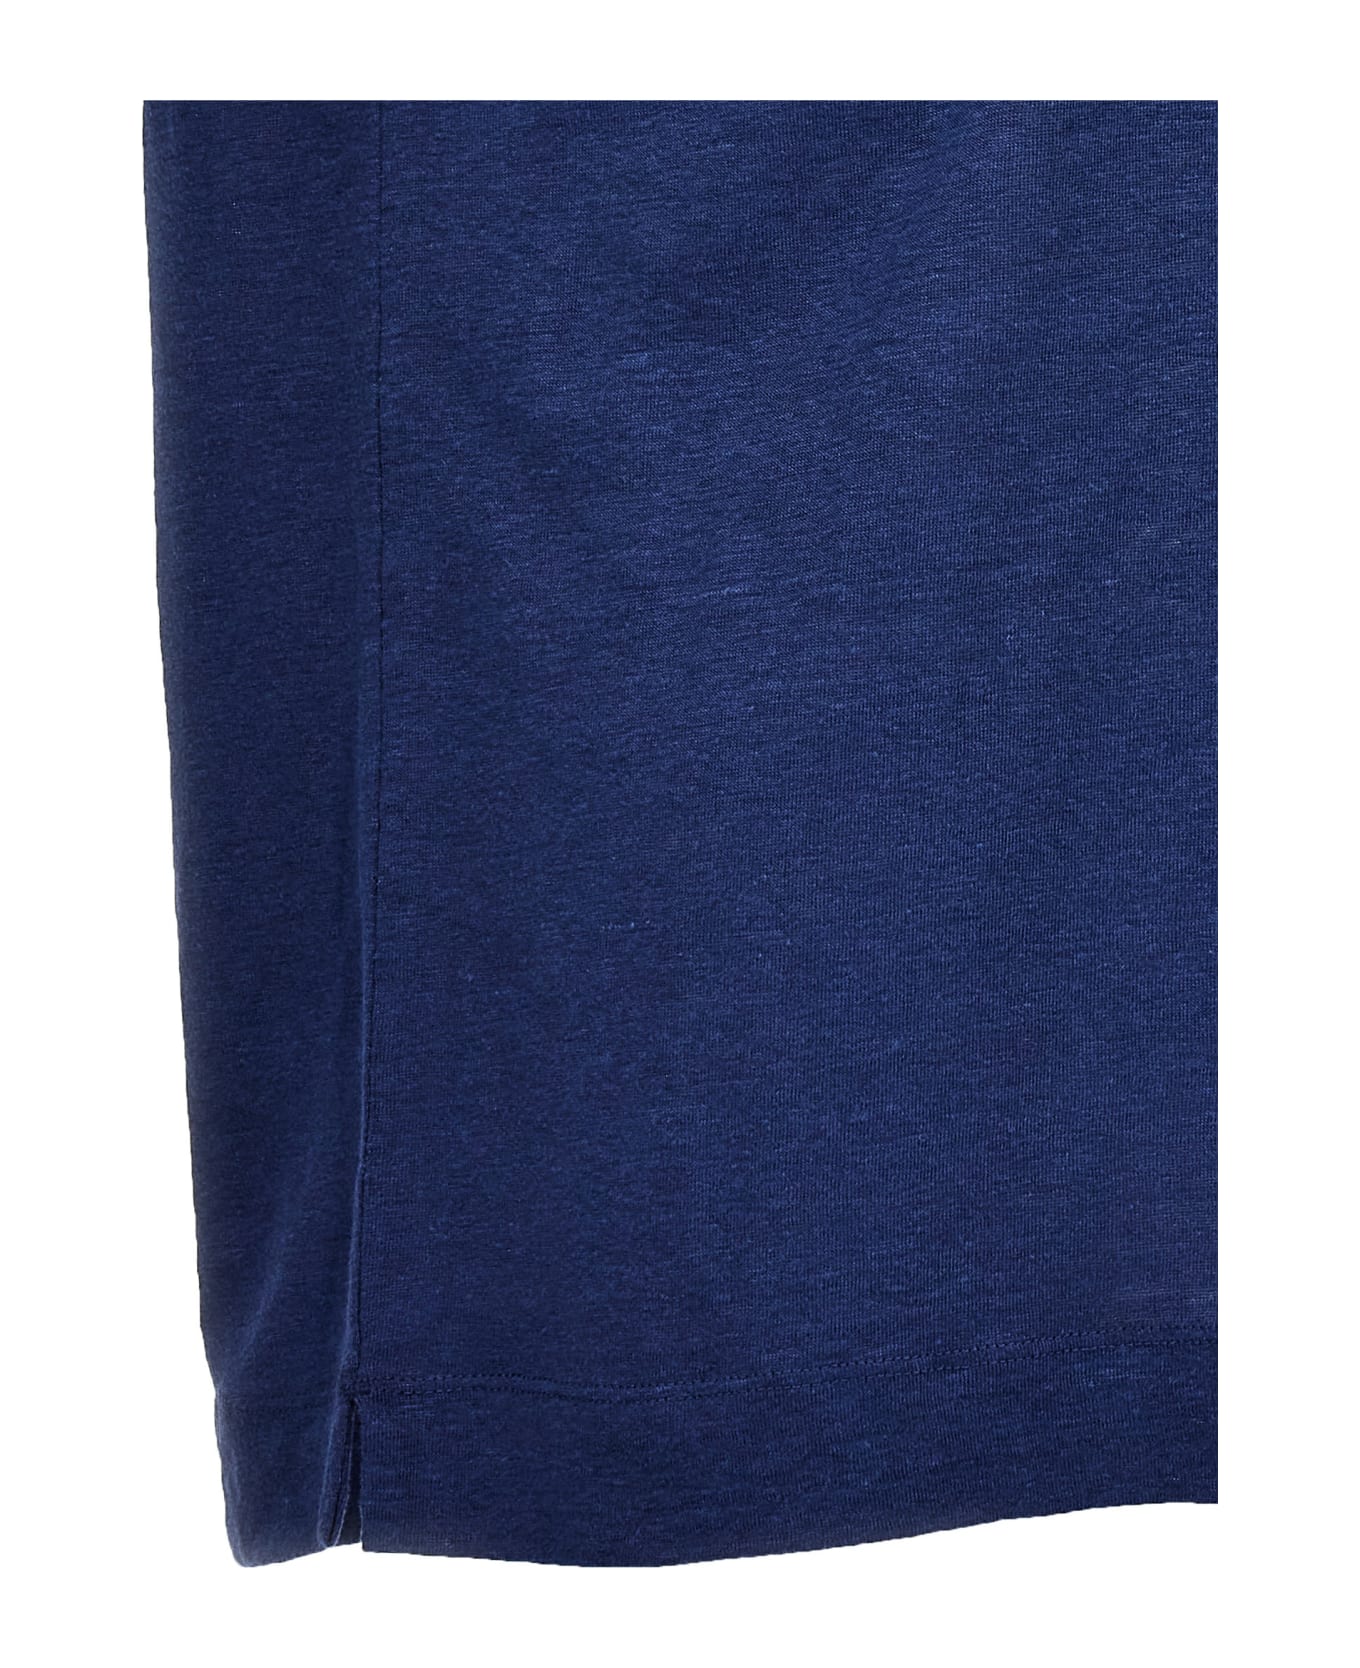 Zegna Linen Polo Shirt - Blue